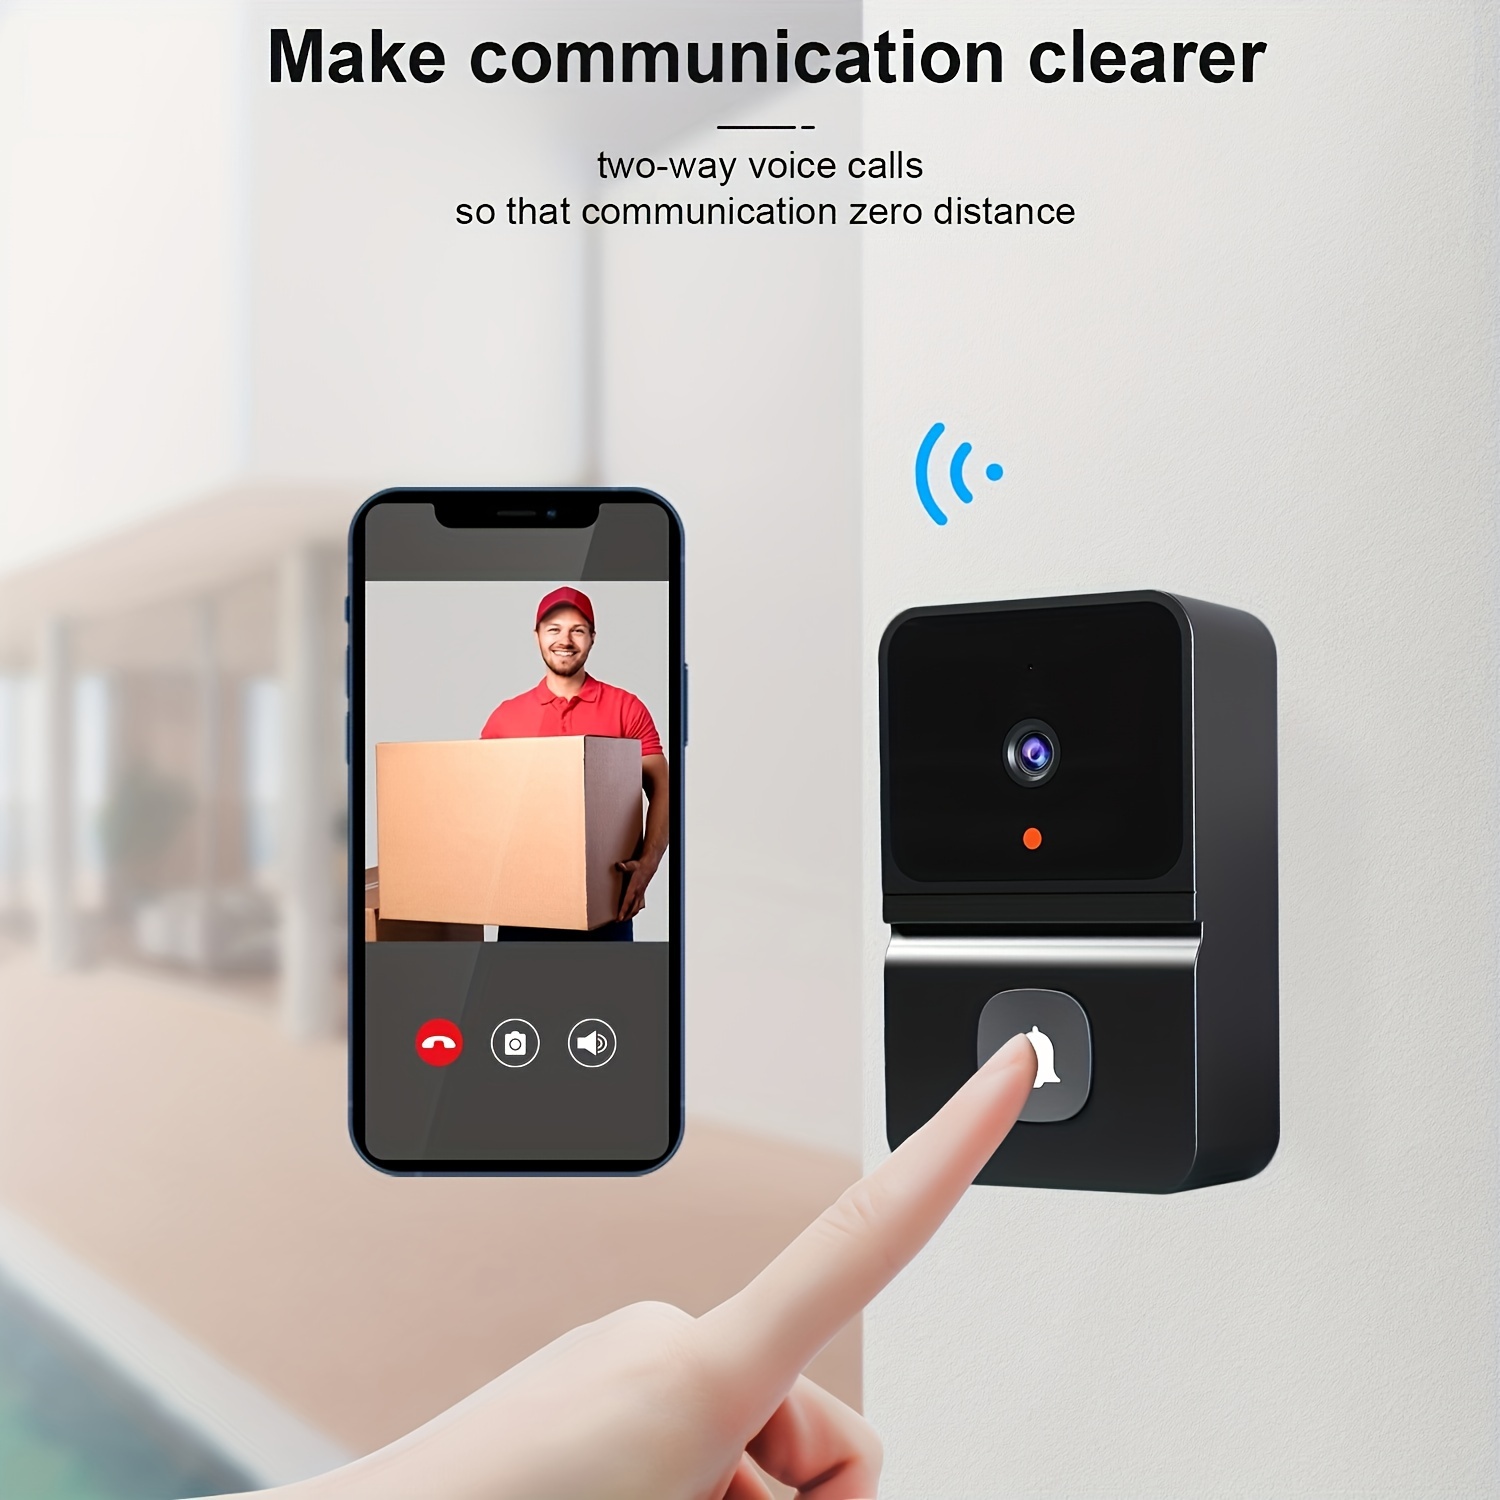 Ring Video Doorbell : Configuration 